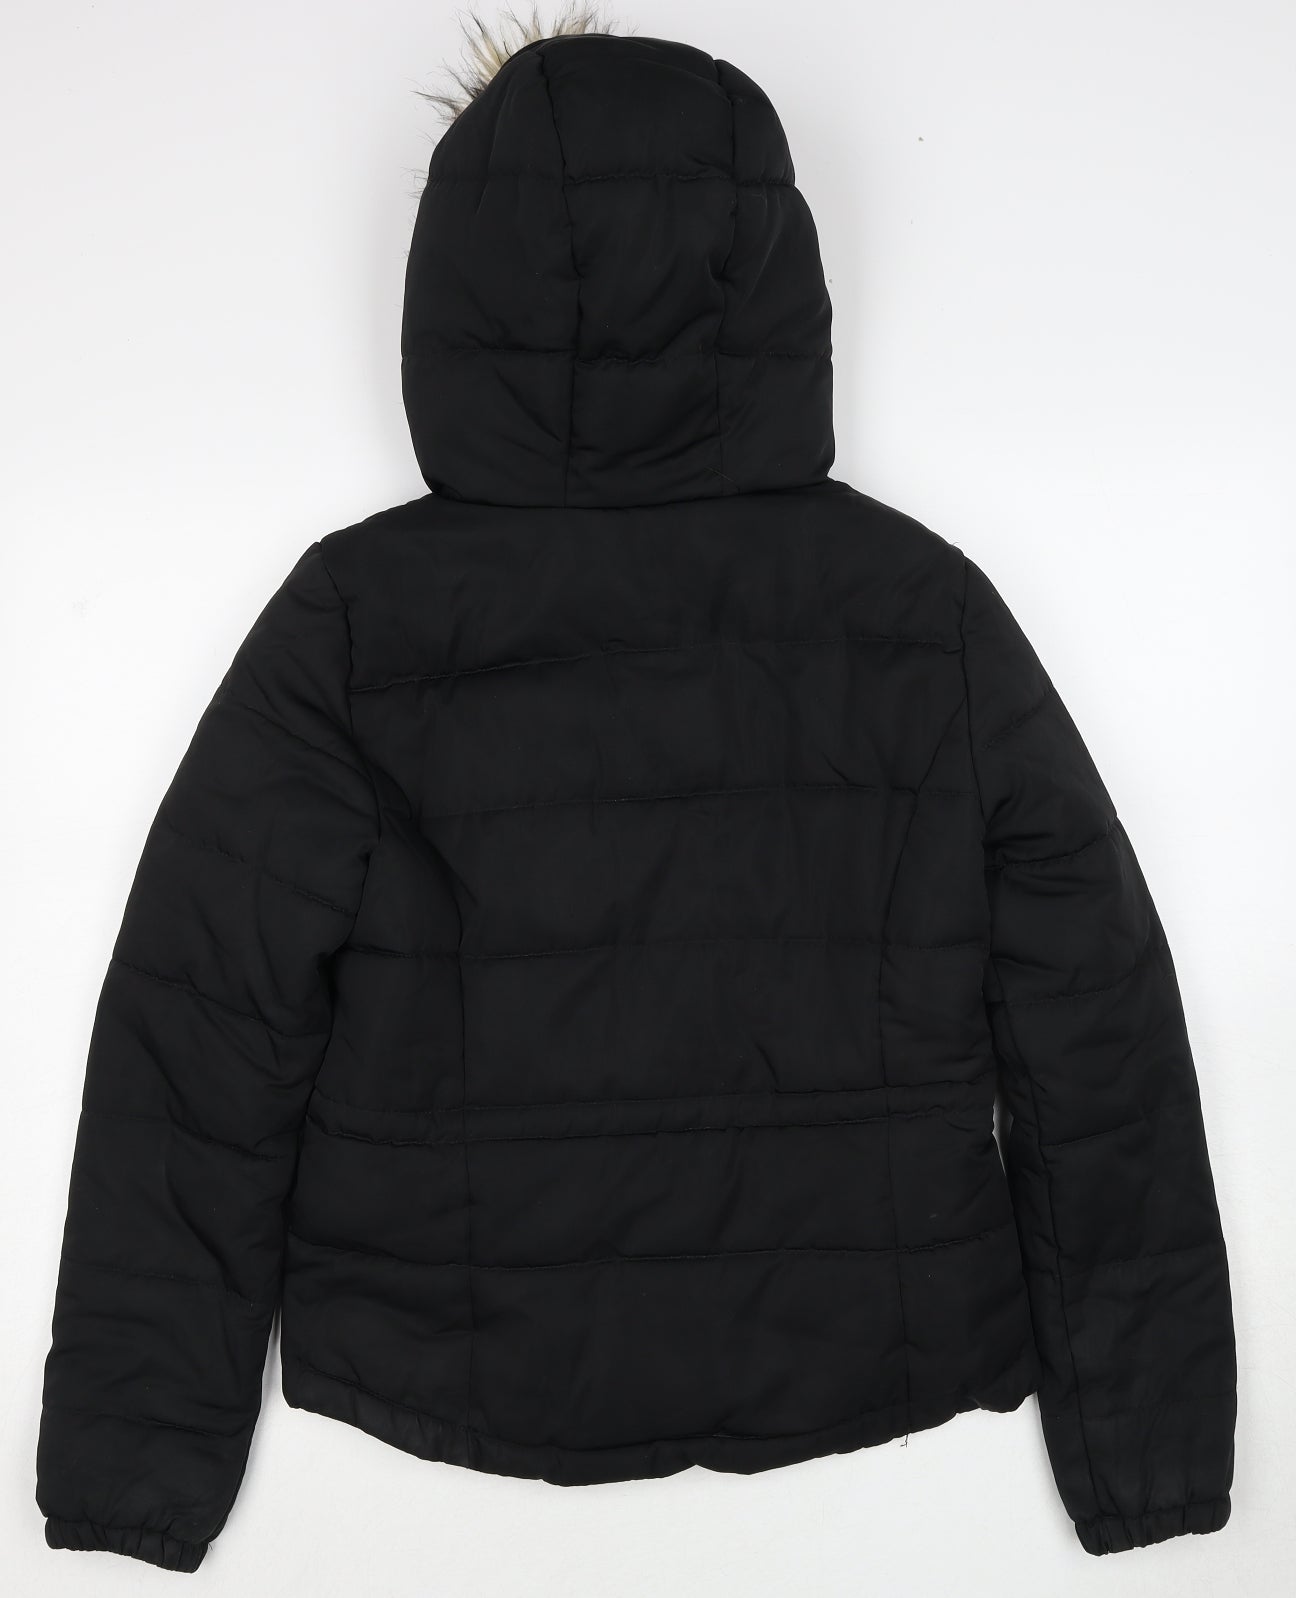 H&M Womens Black Puffer Jacket Jacket Size 8 Zip